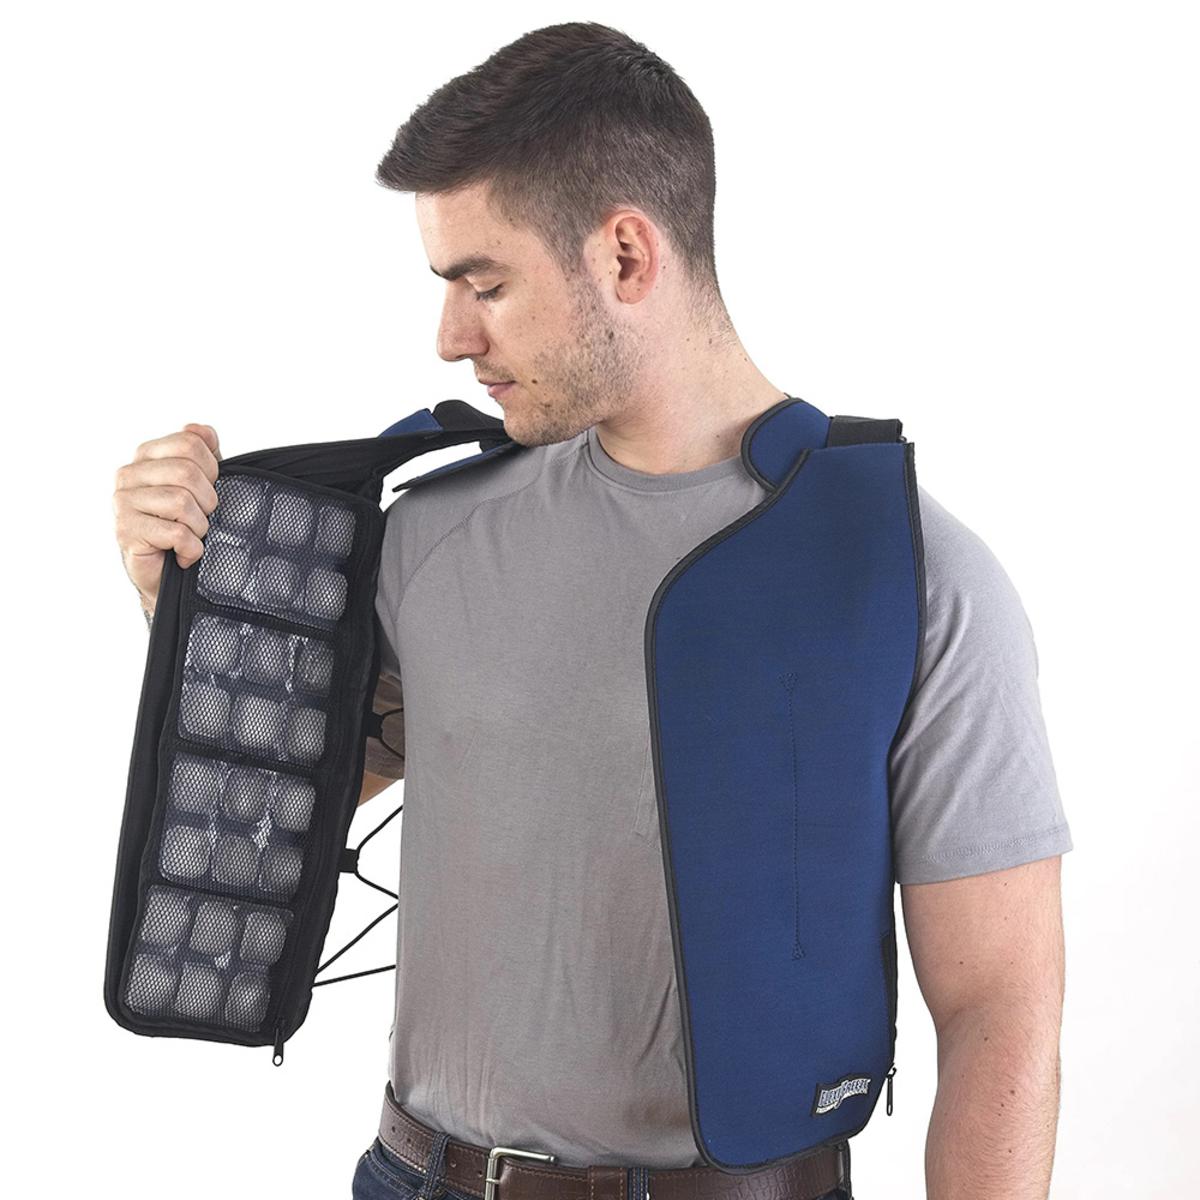 FlexiFreeze Personal Ice Vest Cooling Kit - Zipper Front